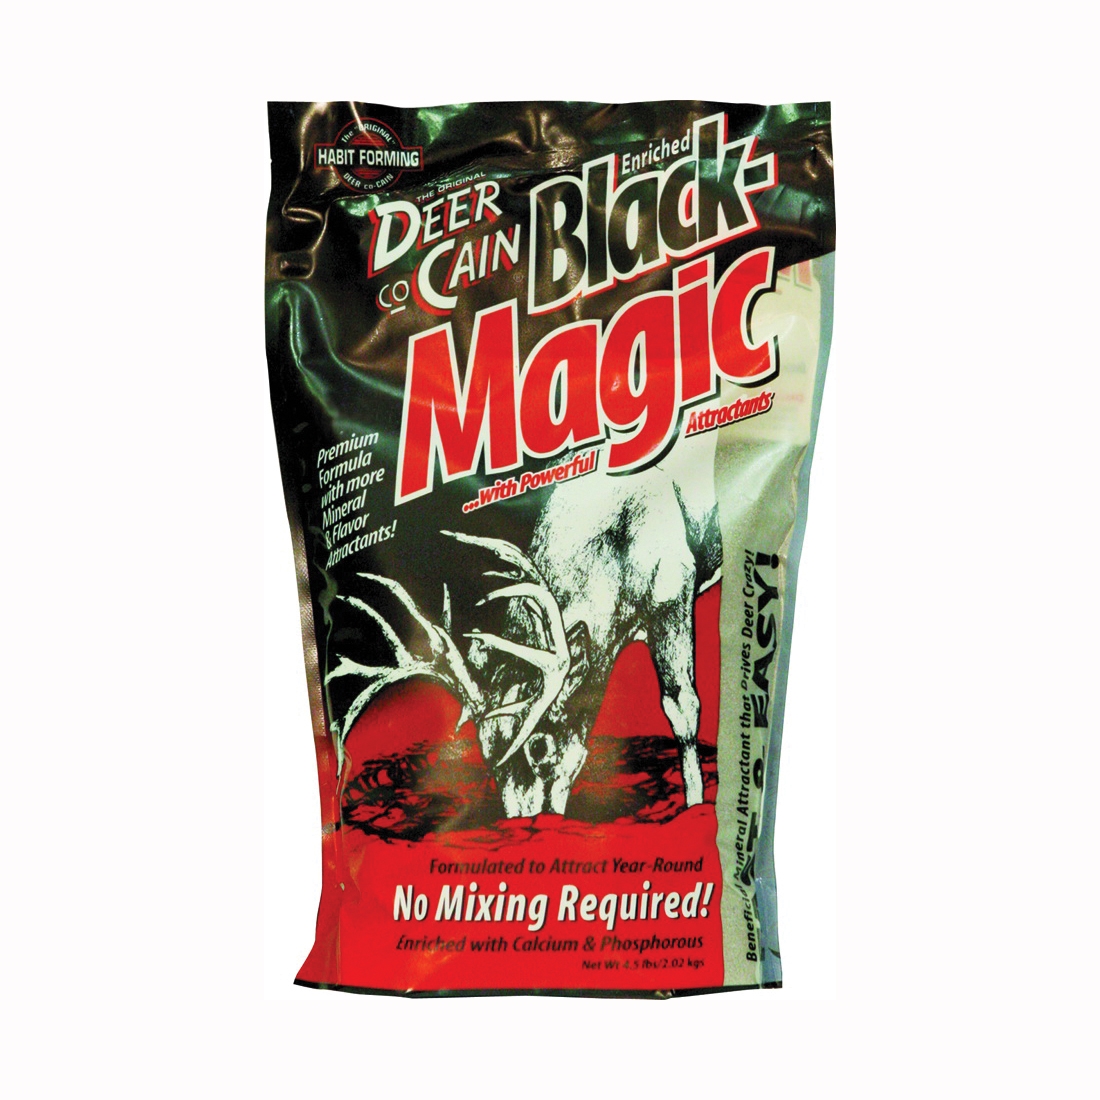 Black Magic, Deer Cane 24502 Feed Mix, 4.5 lb Bag